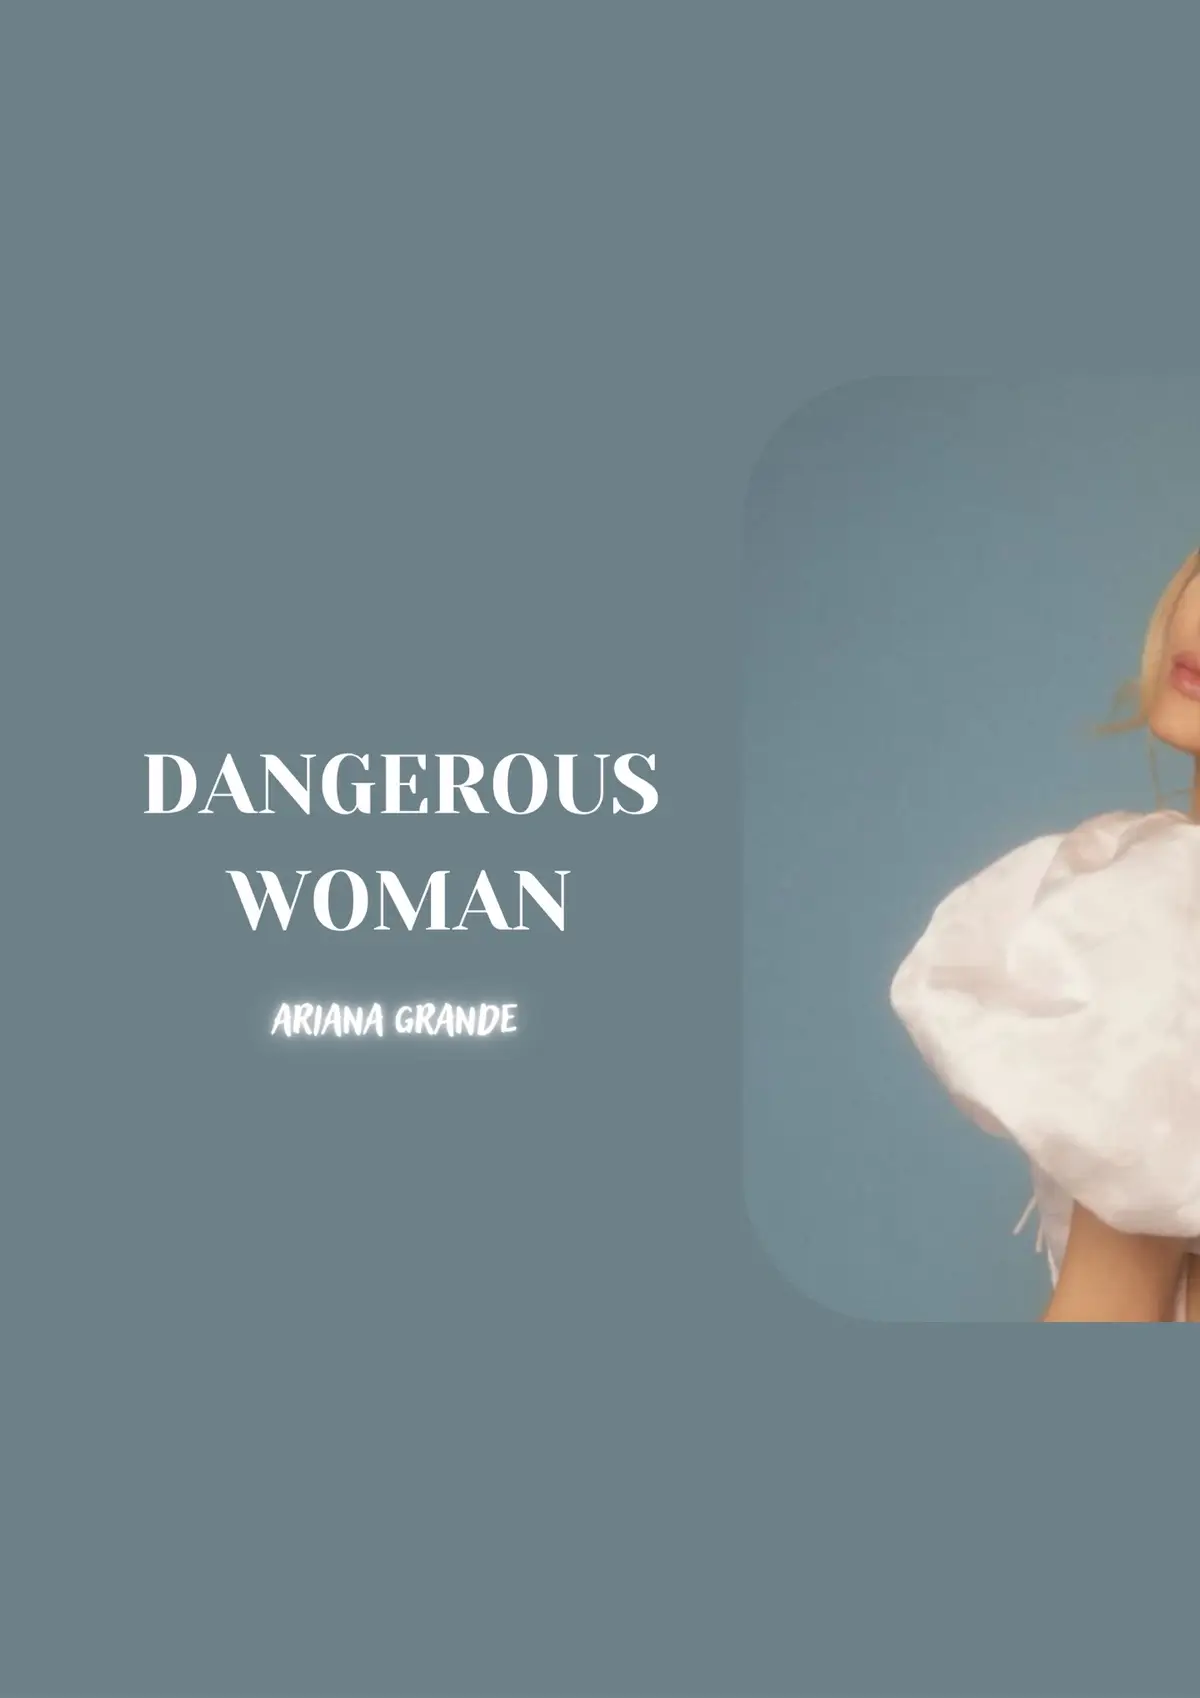 Dangerous Woman - Ariana Grande #🎧 #song #music #songkhoe247 #lyrics #songs #lyric #lyricsvideo  #lyricsmusic #lyrical #lyricvideo #musica #edit #spotify #playlist #pourtoi #songss #arianagrande #ariana #dangerouswoman 